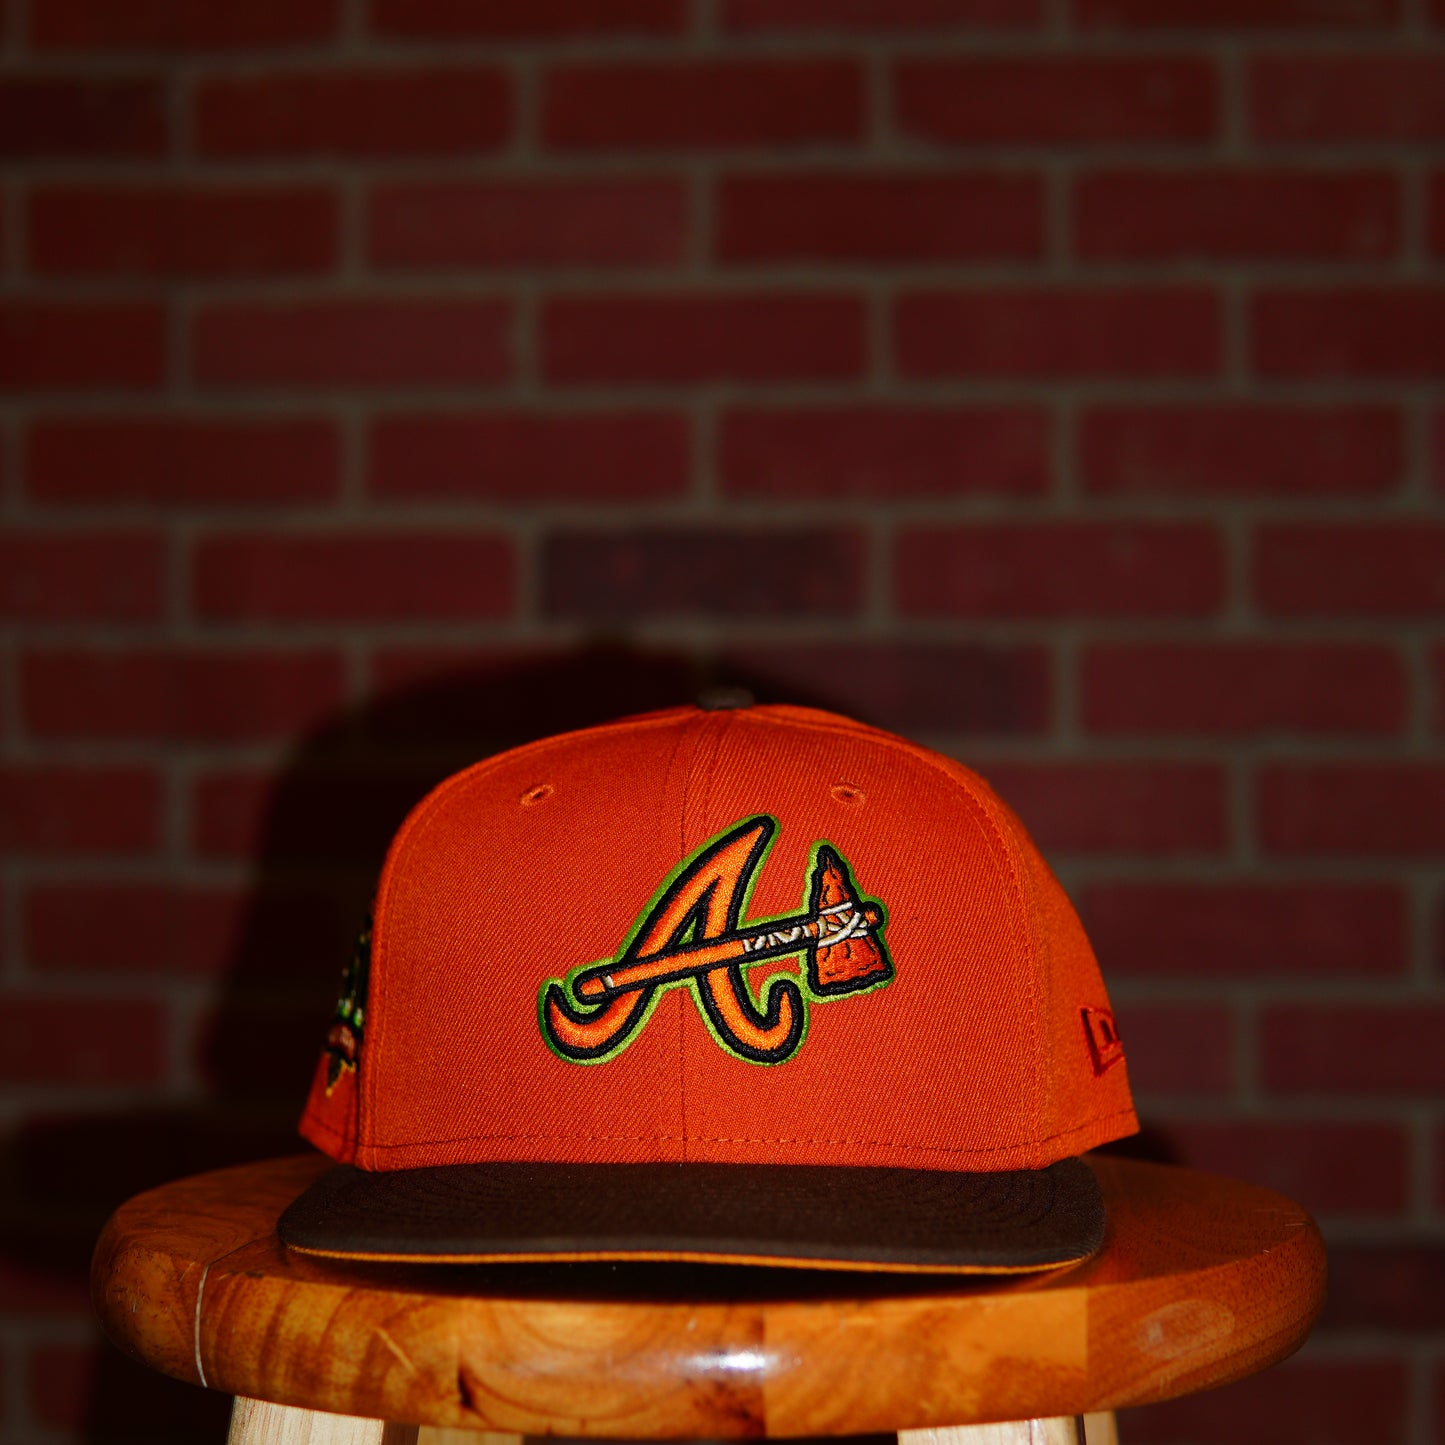 Hat Club MLB Atlanta Braves Orange 150th Anniversary Patch Fitted Hat